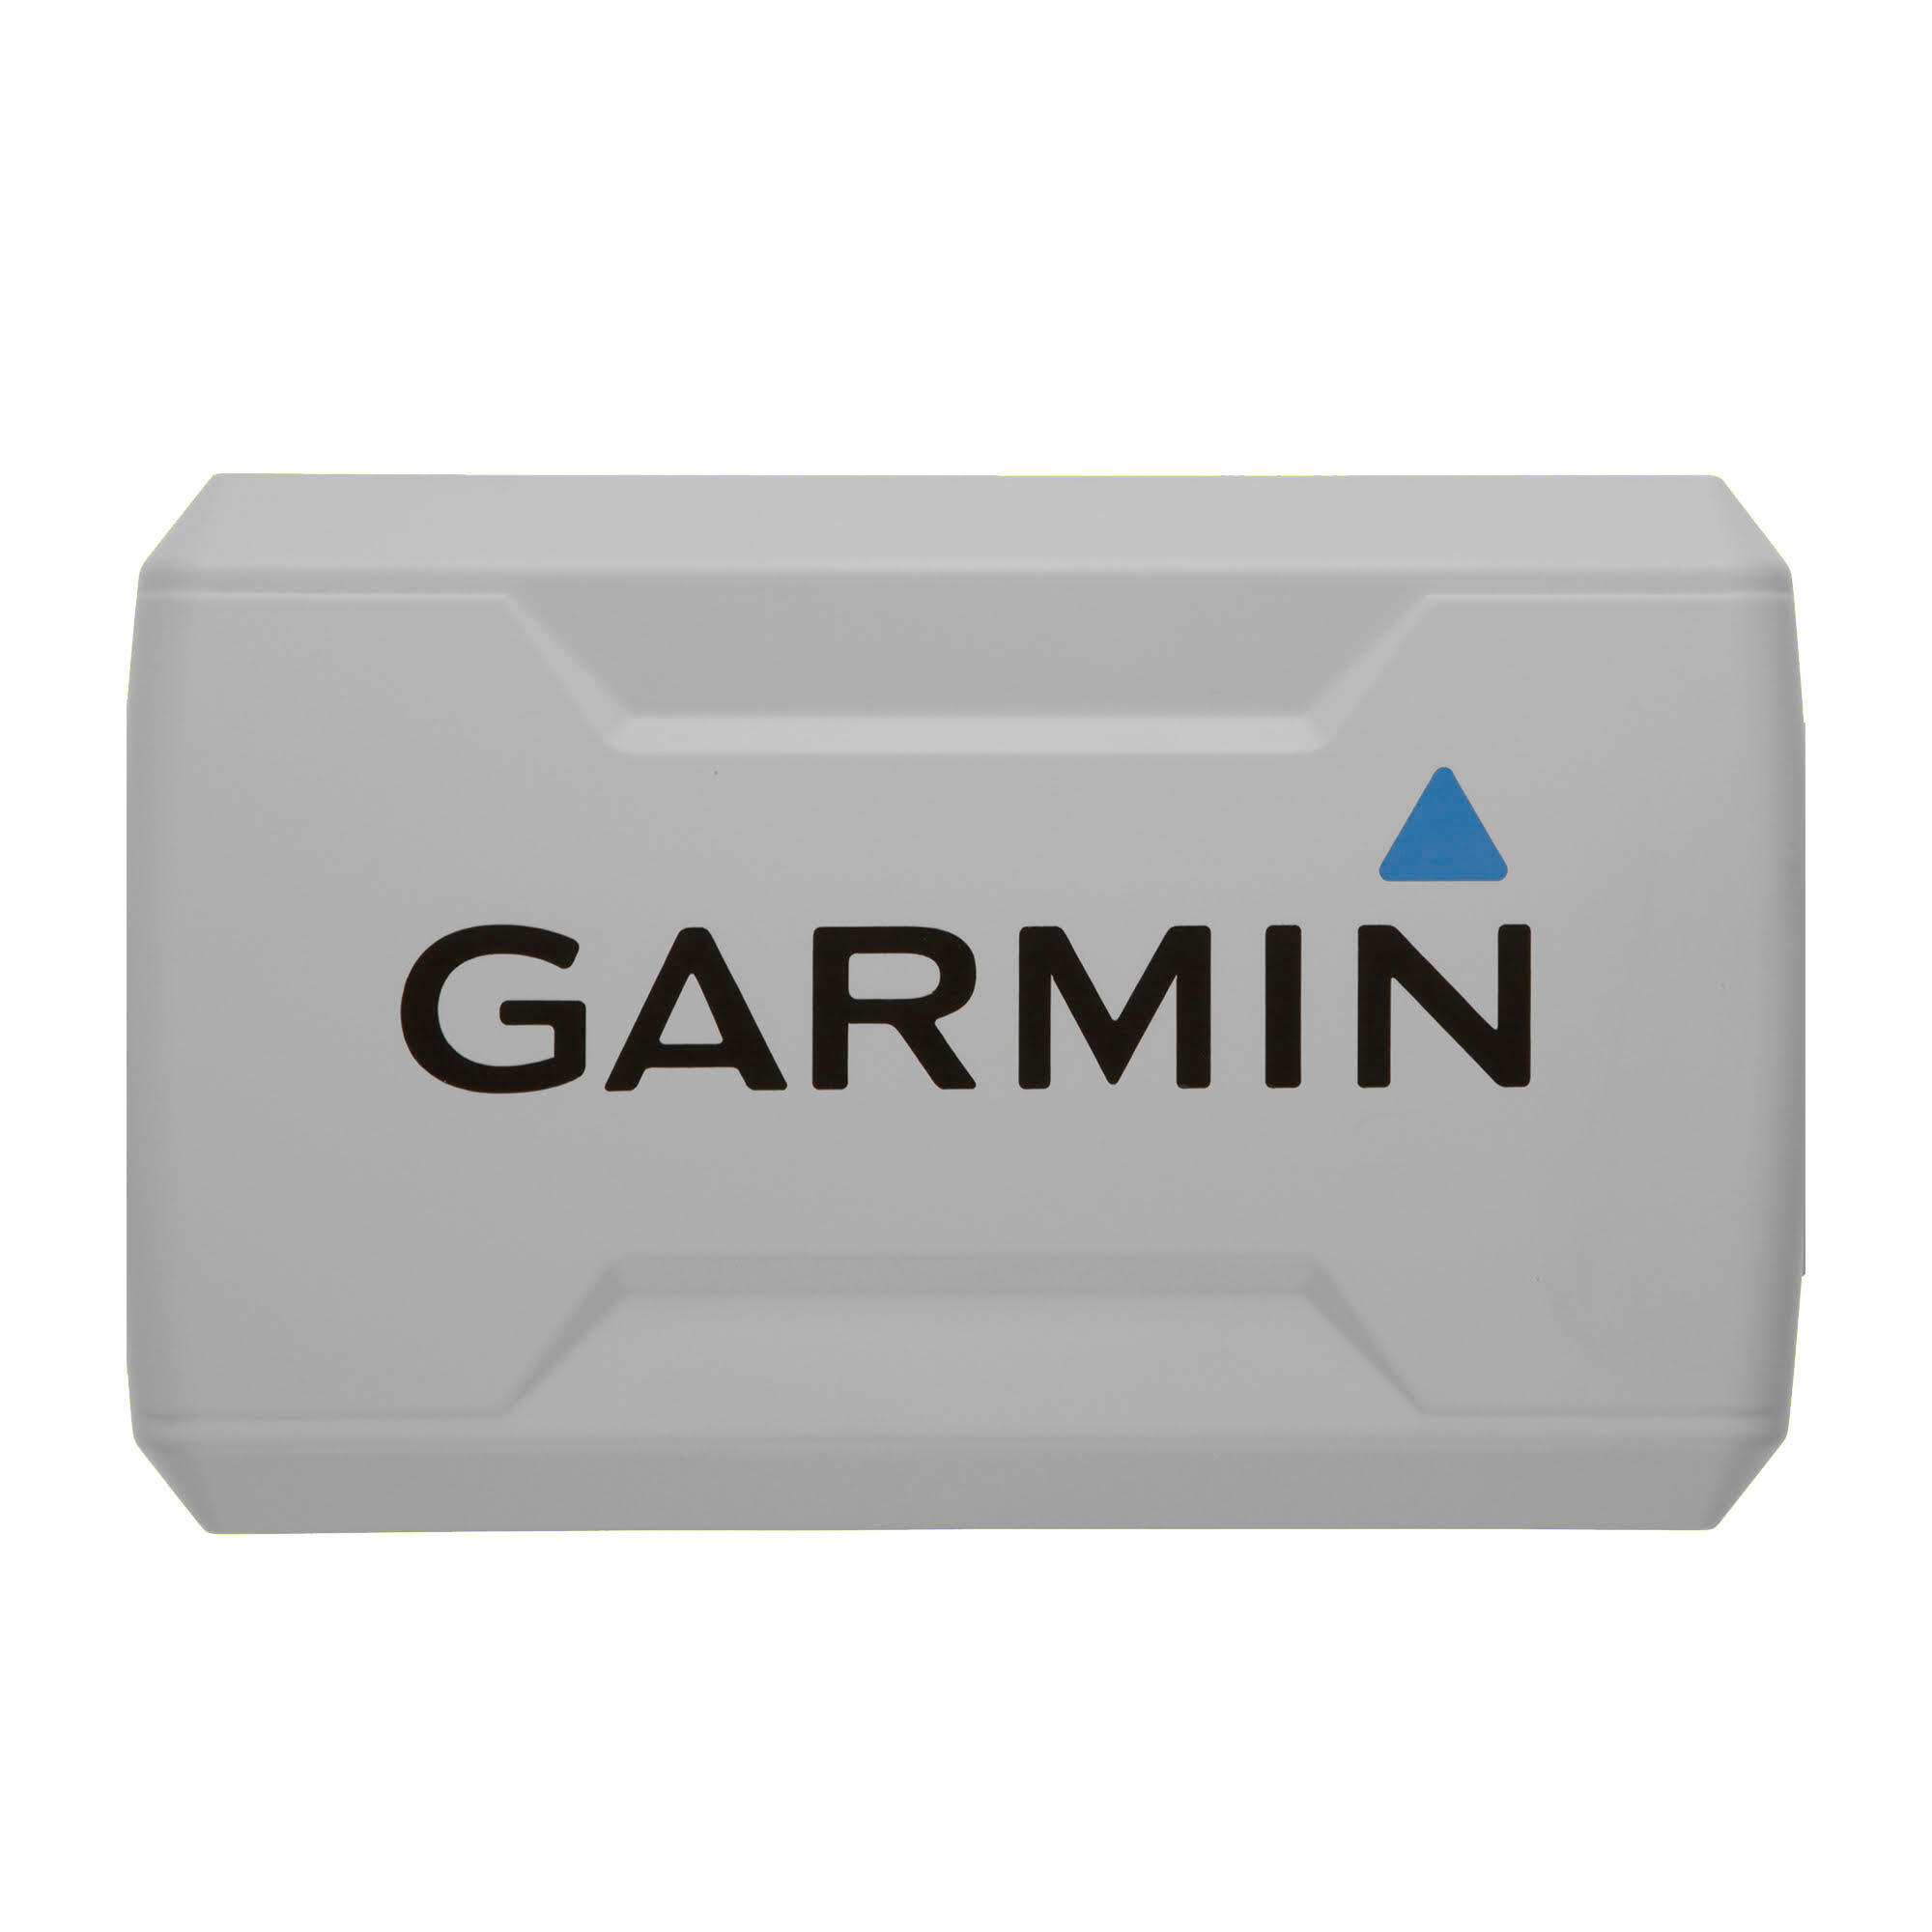 Carp fishing protective cover for Garmin Striker 5 plus sonar 2/2